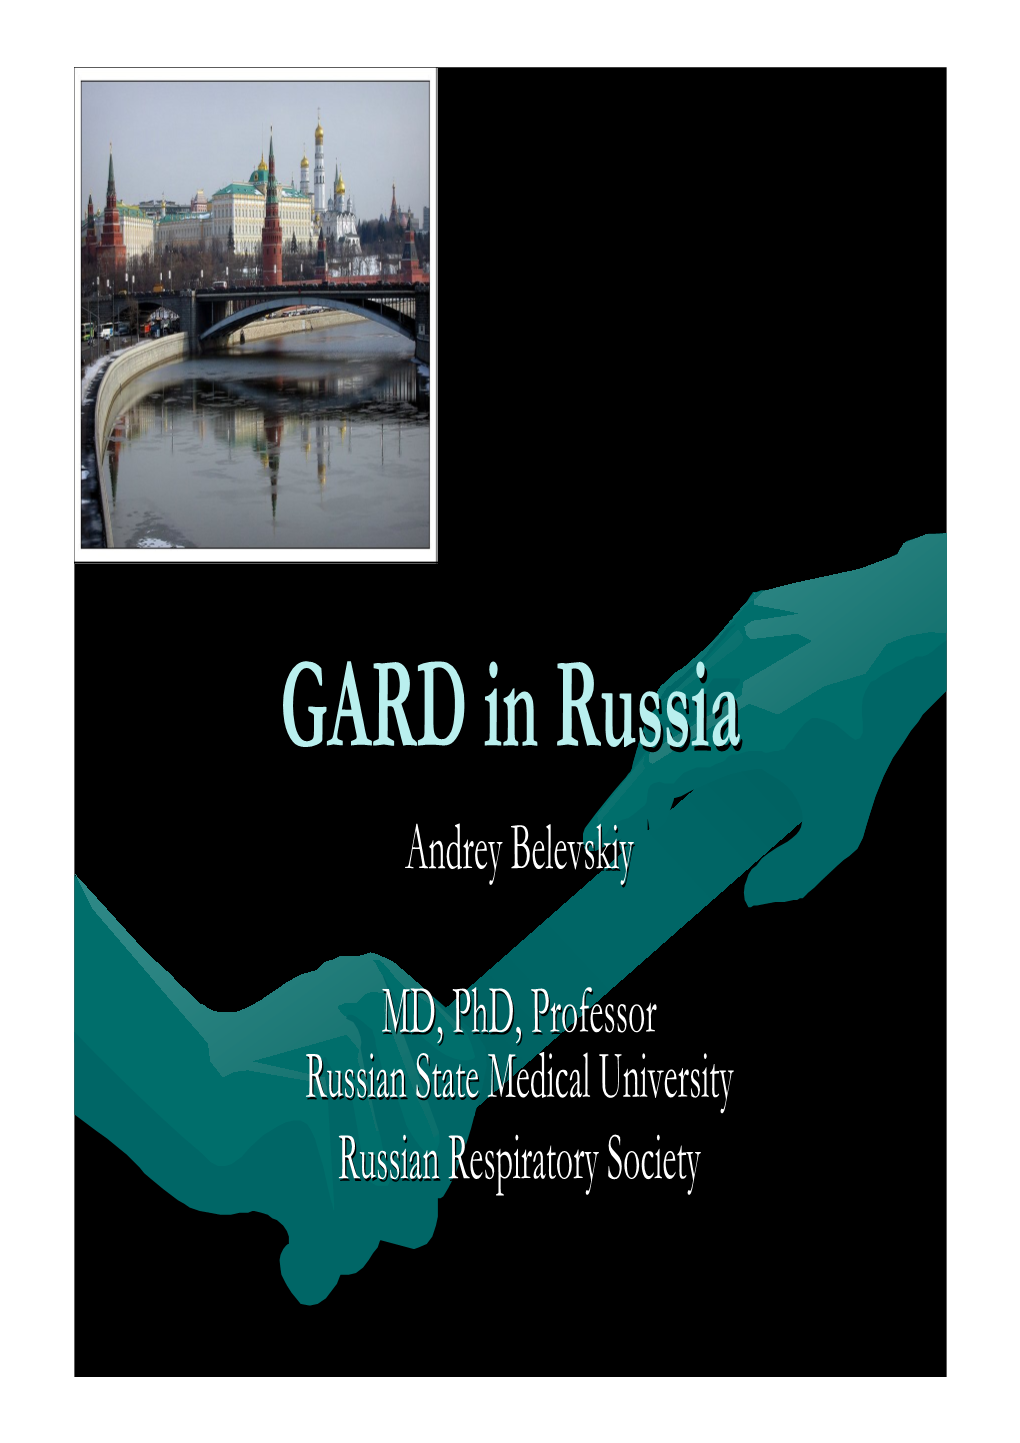 GARD in Russia